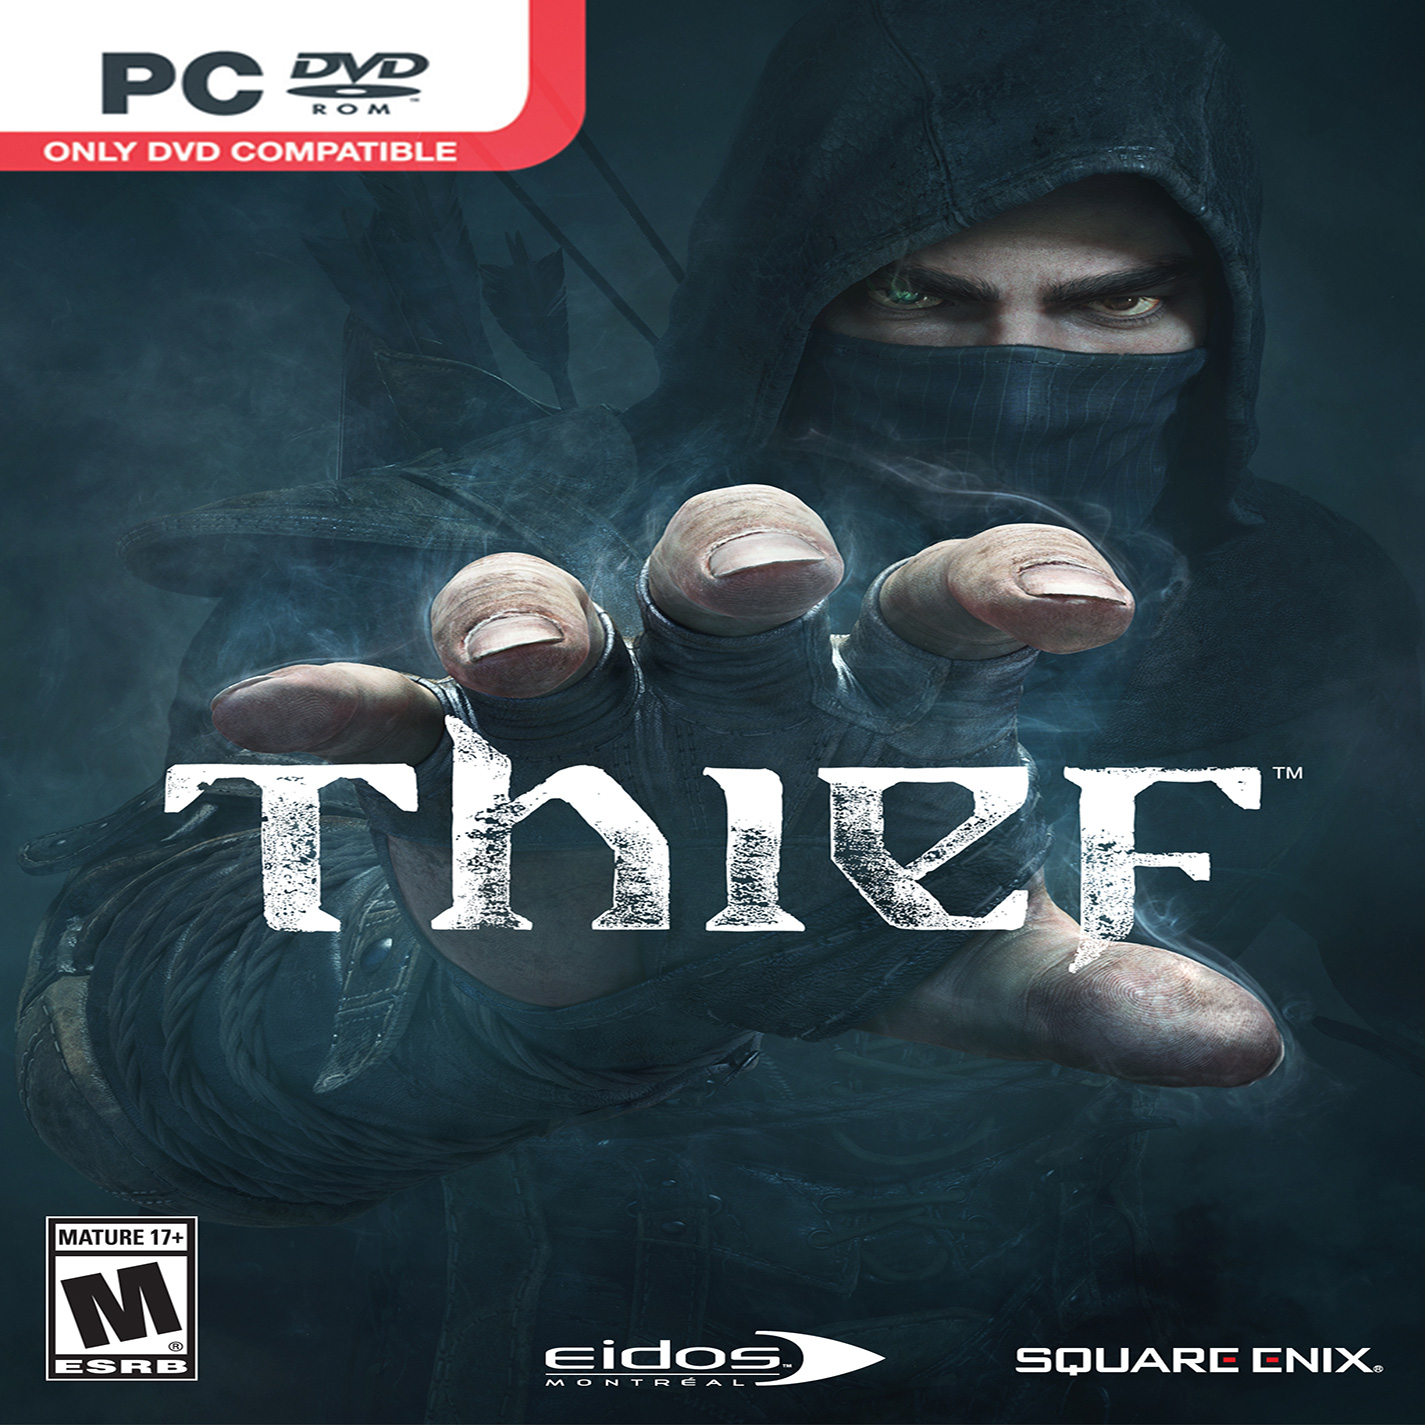 Thief 4 - predn CD obal